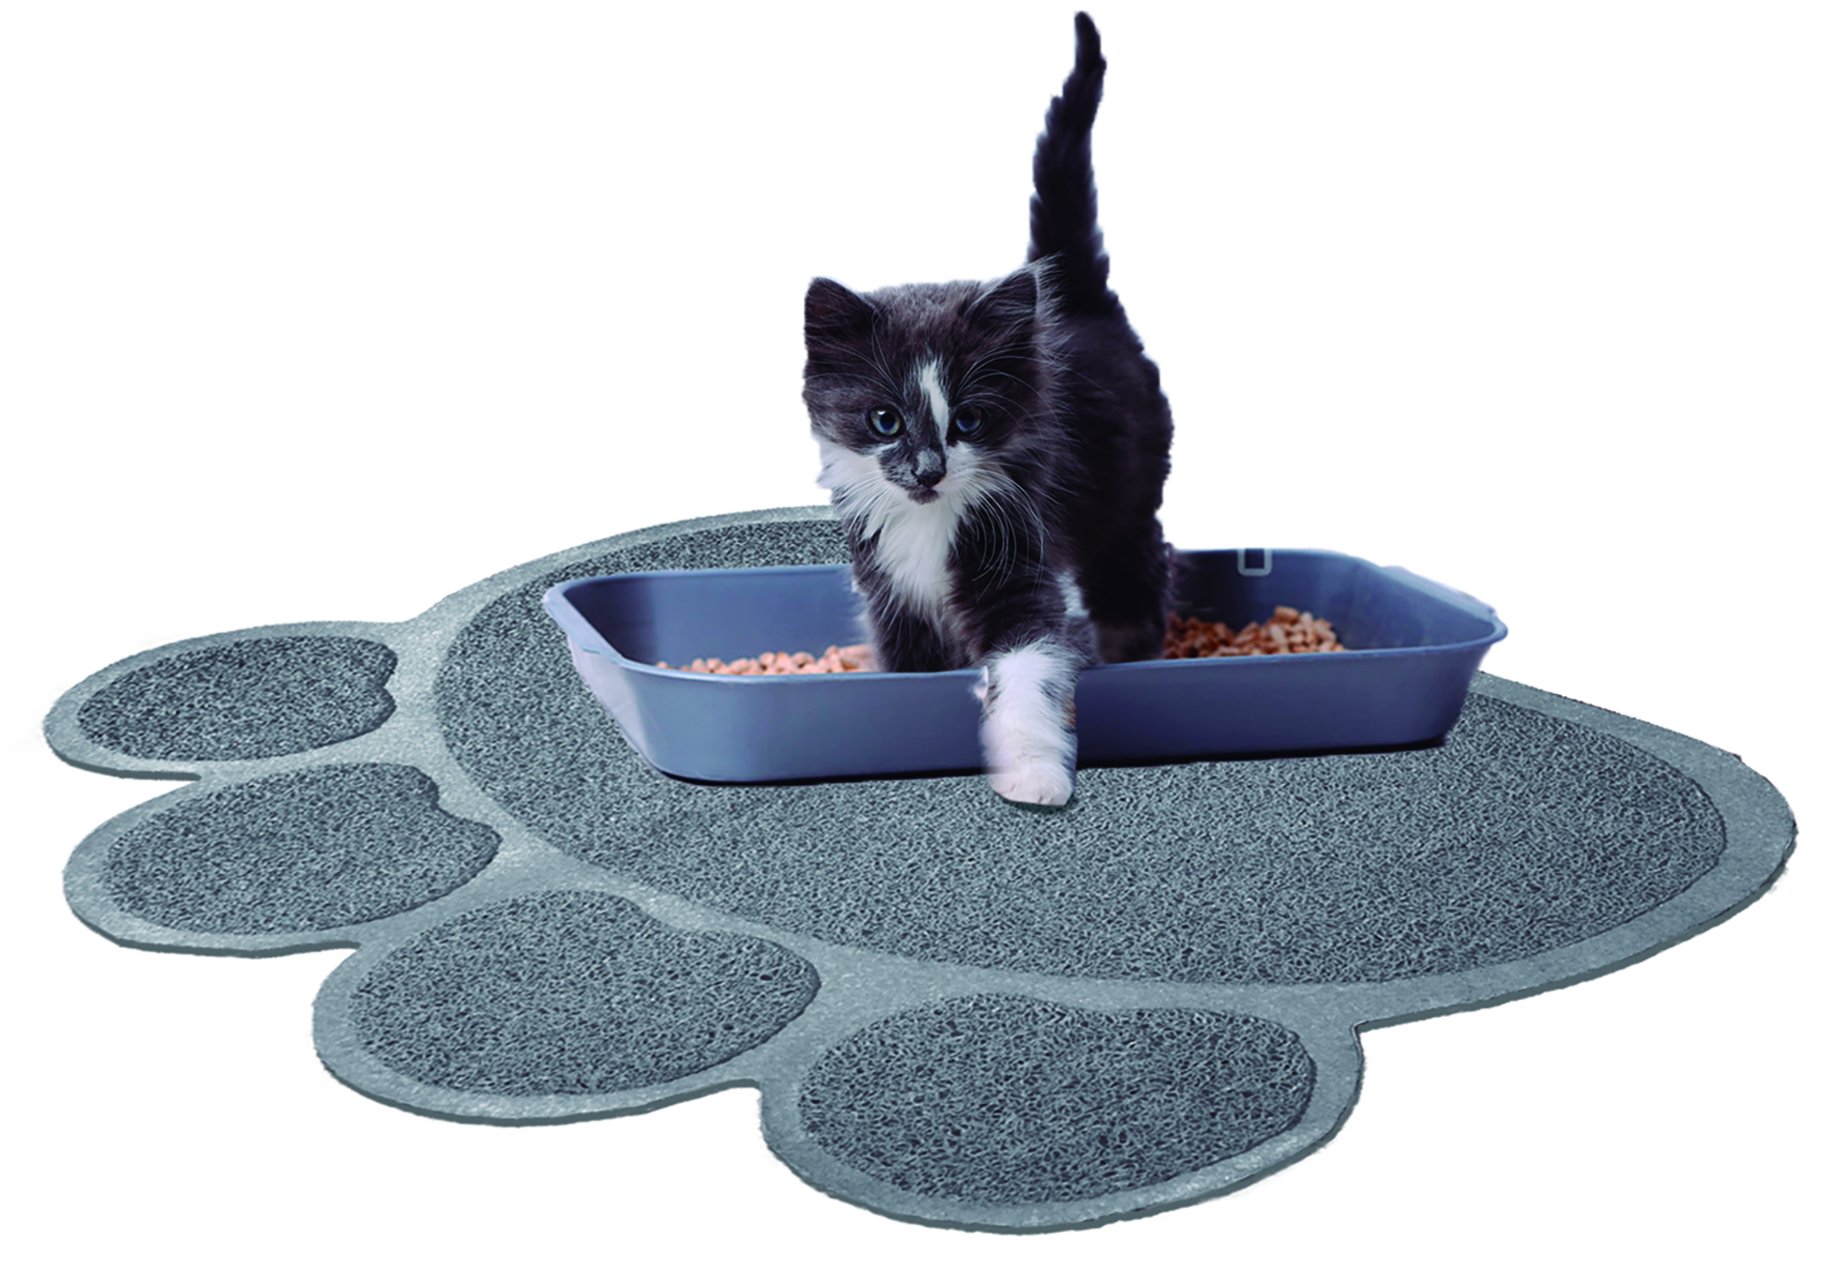 Mat for Cats - Kattenmat antislip